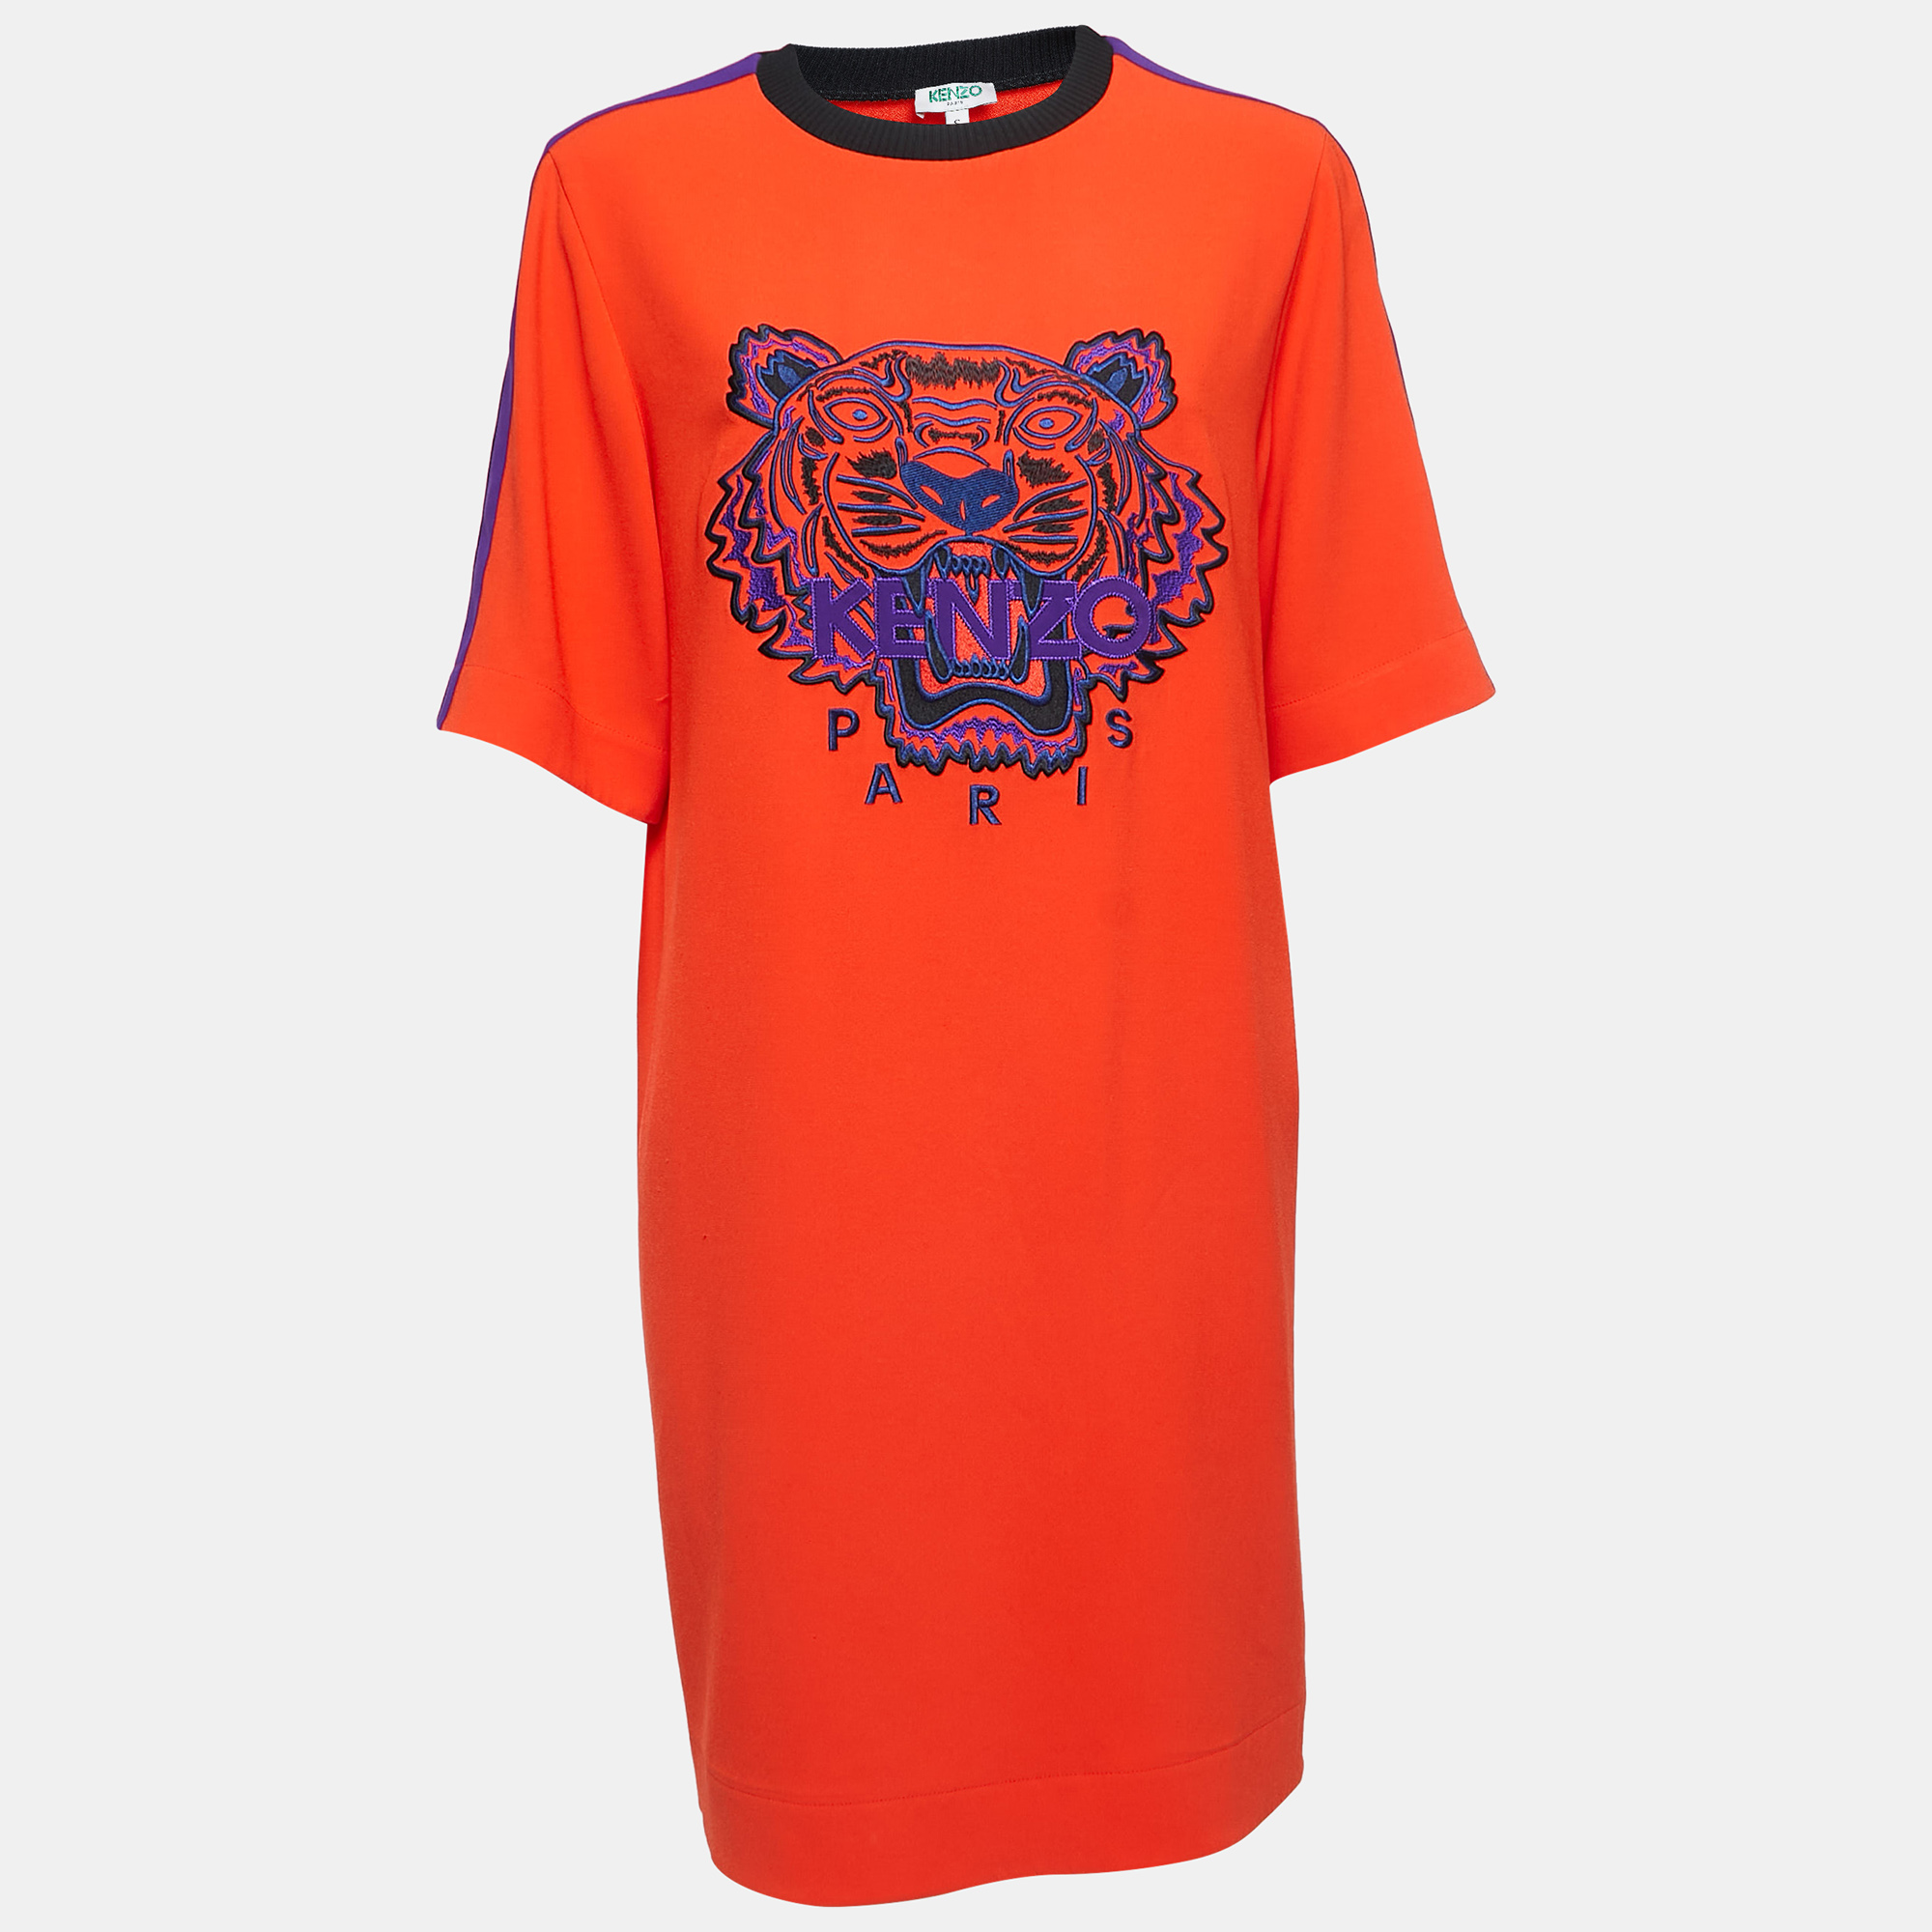 Kenzo orange crepe tiger motif t-shirt dress s